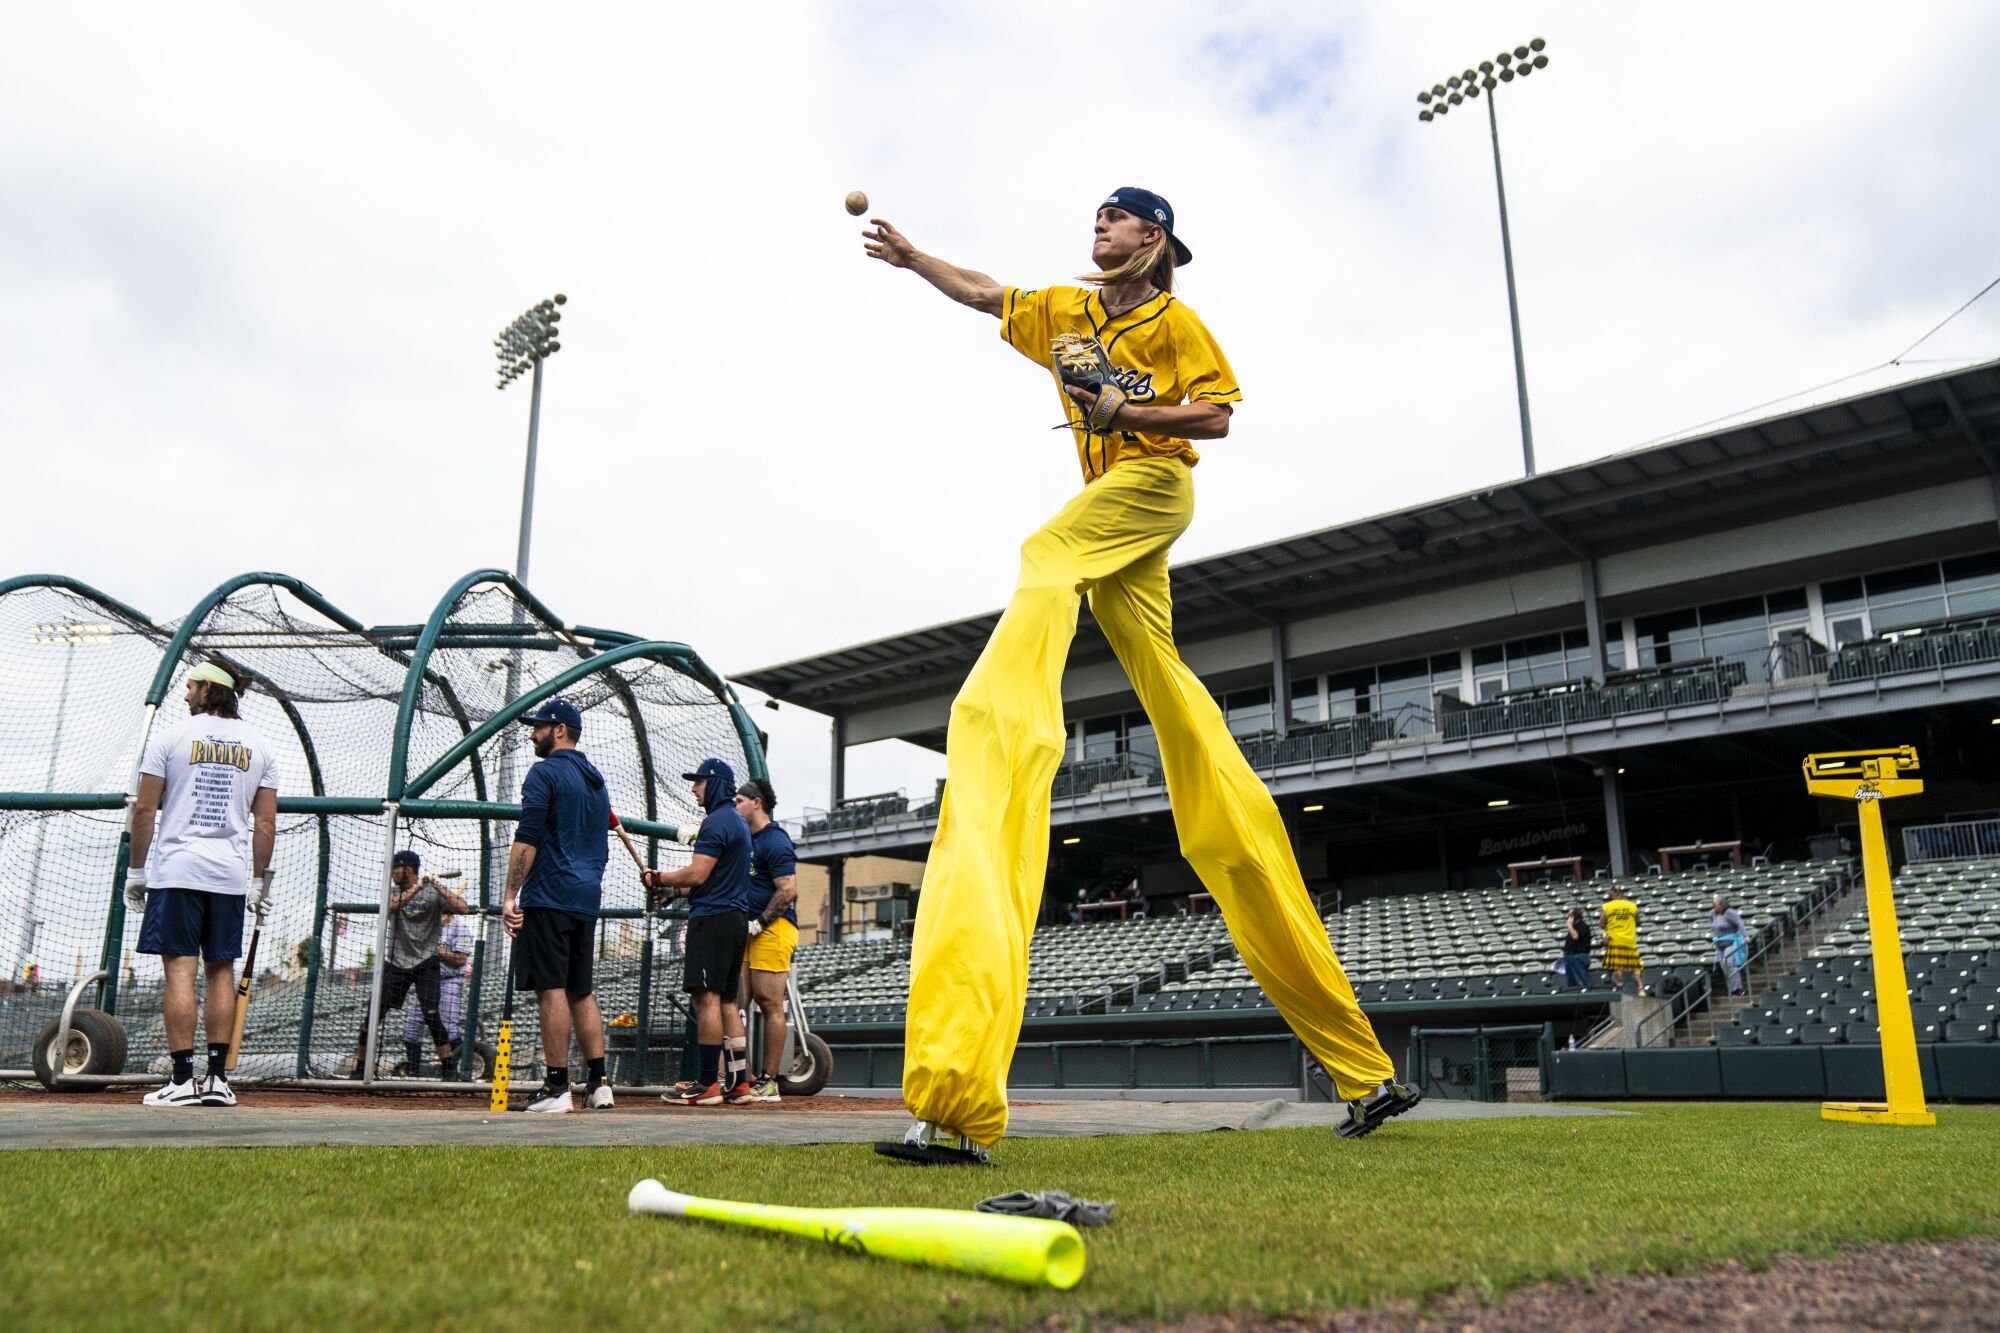 Savannah Bananas player Dakota Albritton warms up while pitching on stilts during before a game.